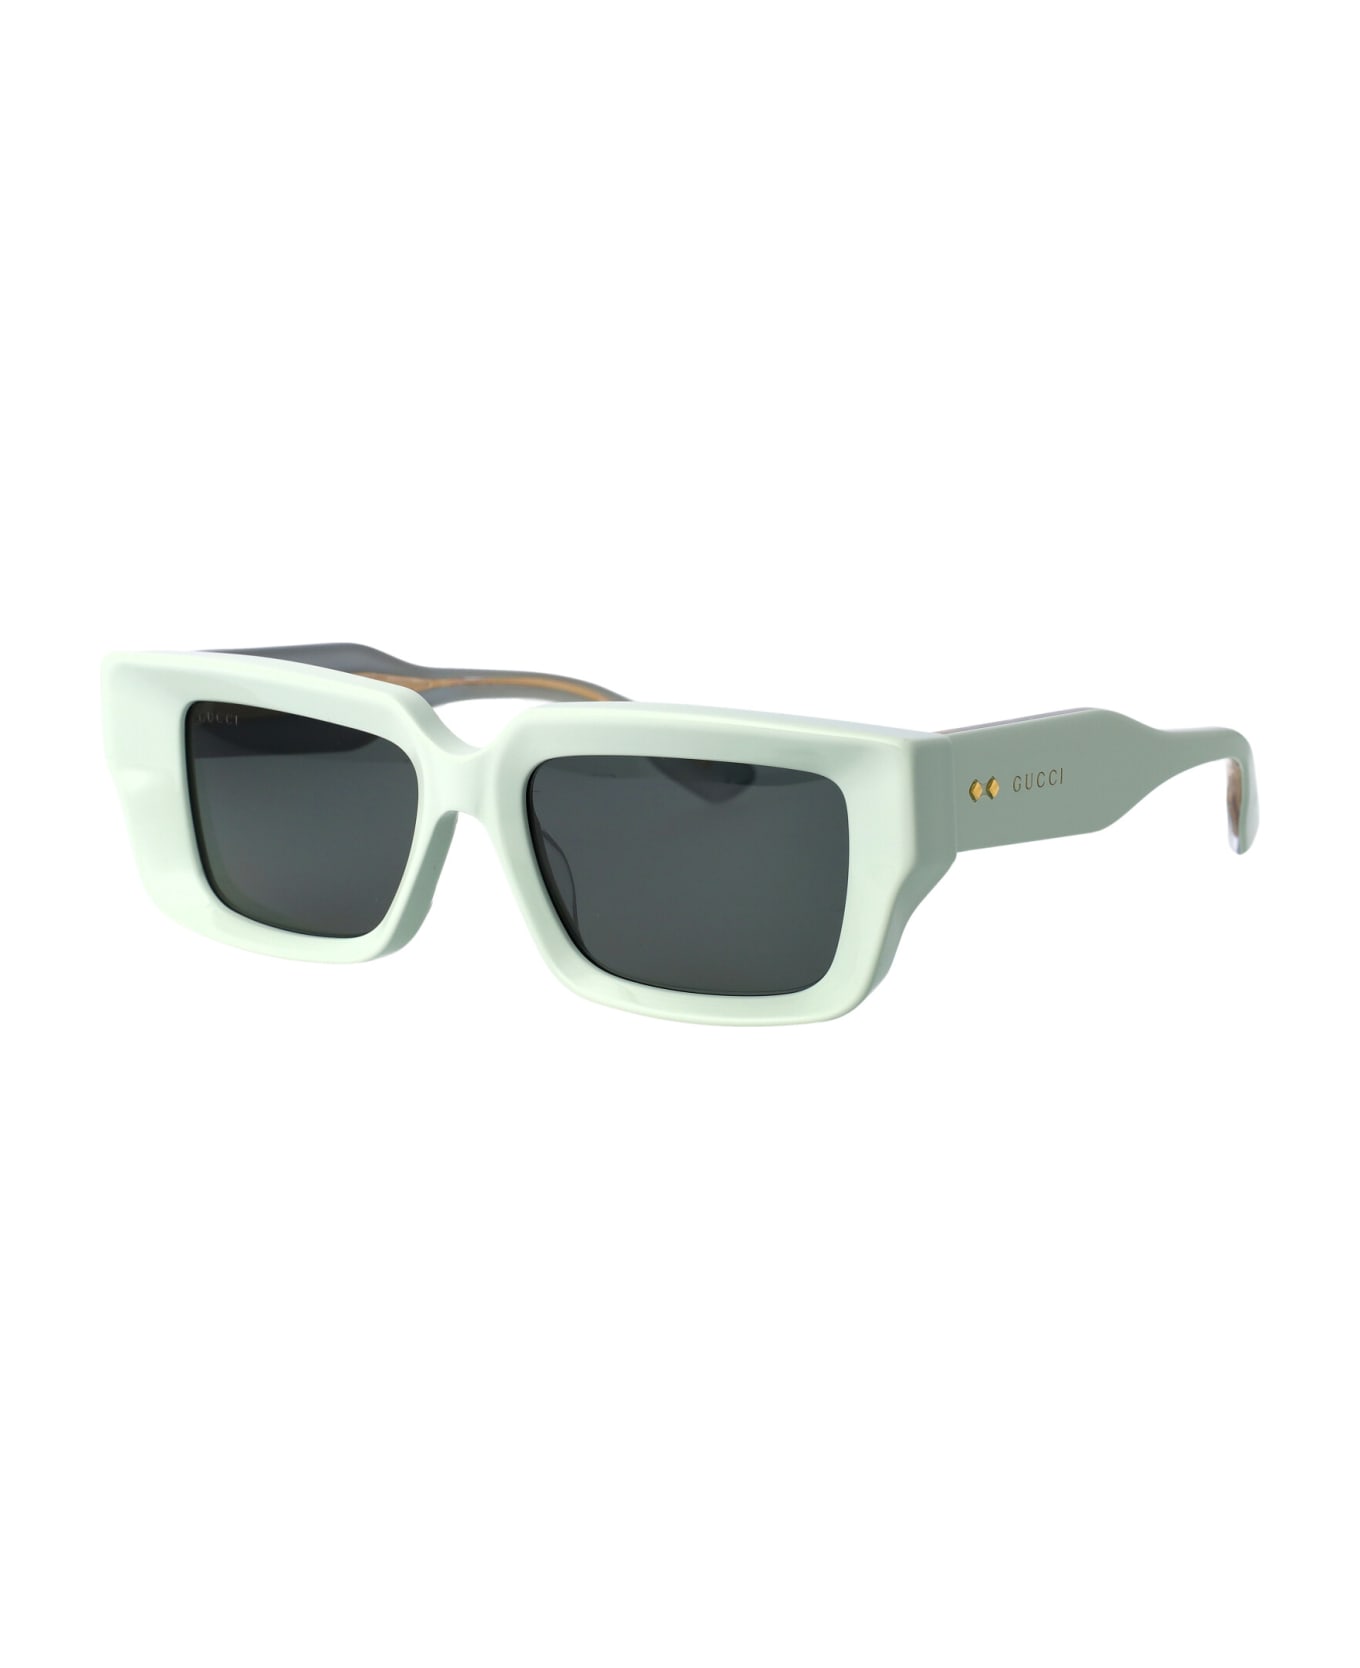 Gucci Eyewear Gg1529s Sunglasses - 003 GREEN GREEN GREY